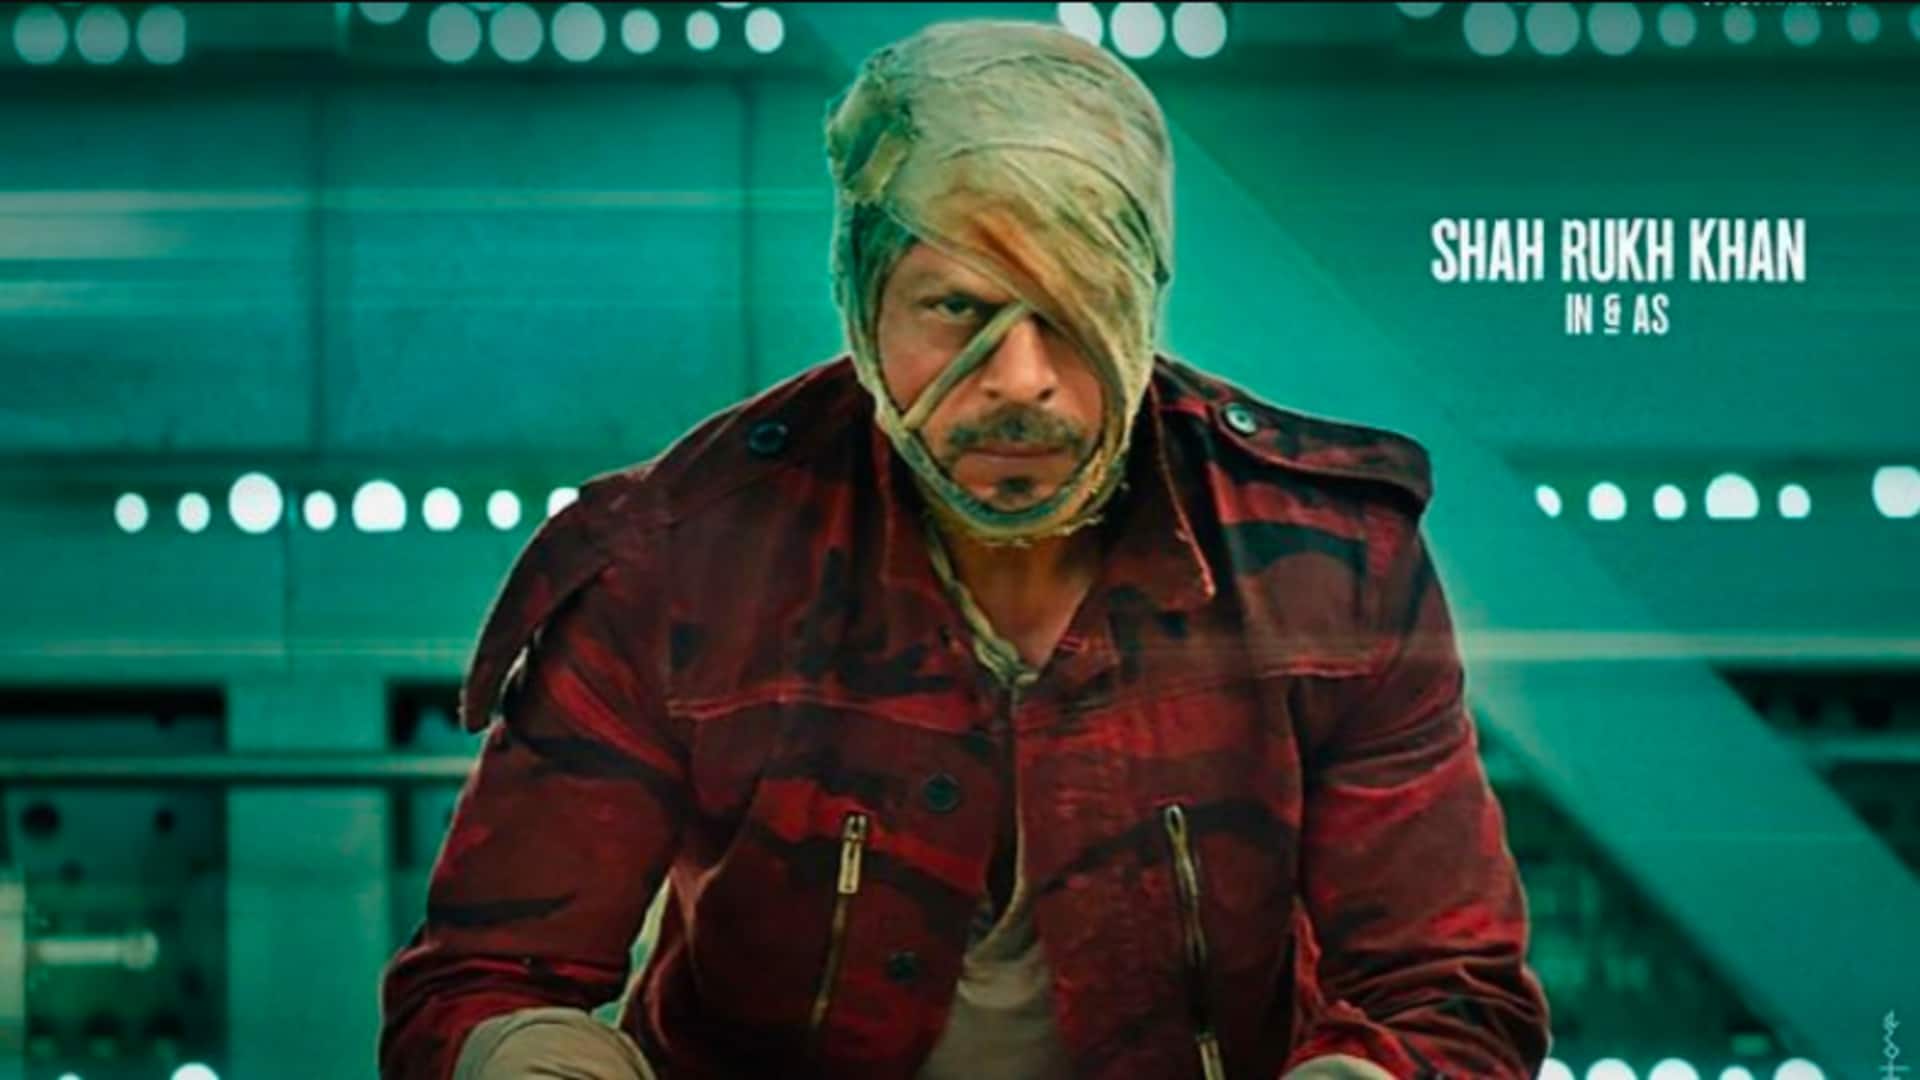 फिल्म 'जवान' को लेकर उत्साहित महेश बाबू, शाहरुख खान को ऐसे दी बधाई 